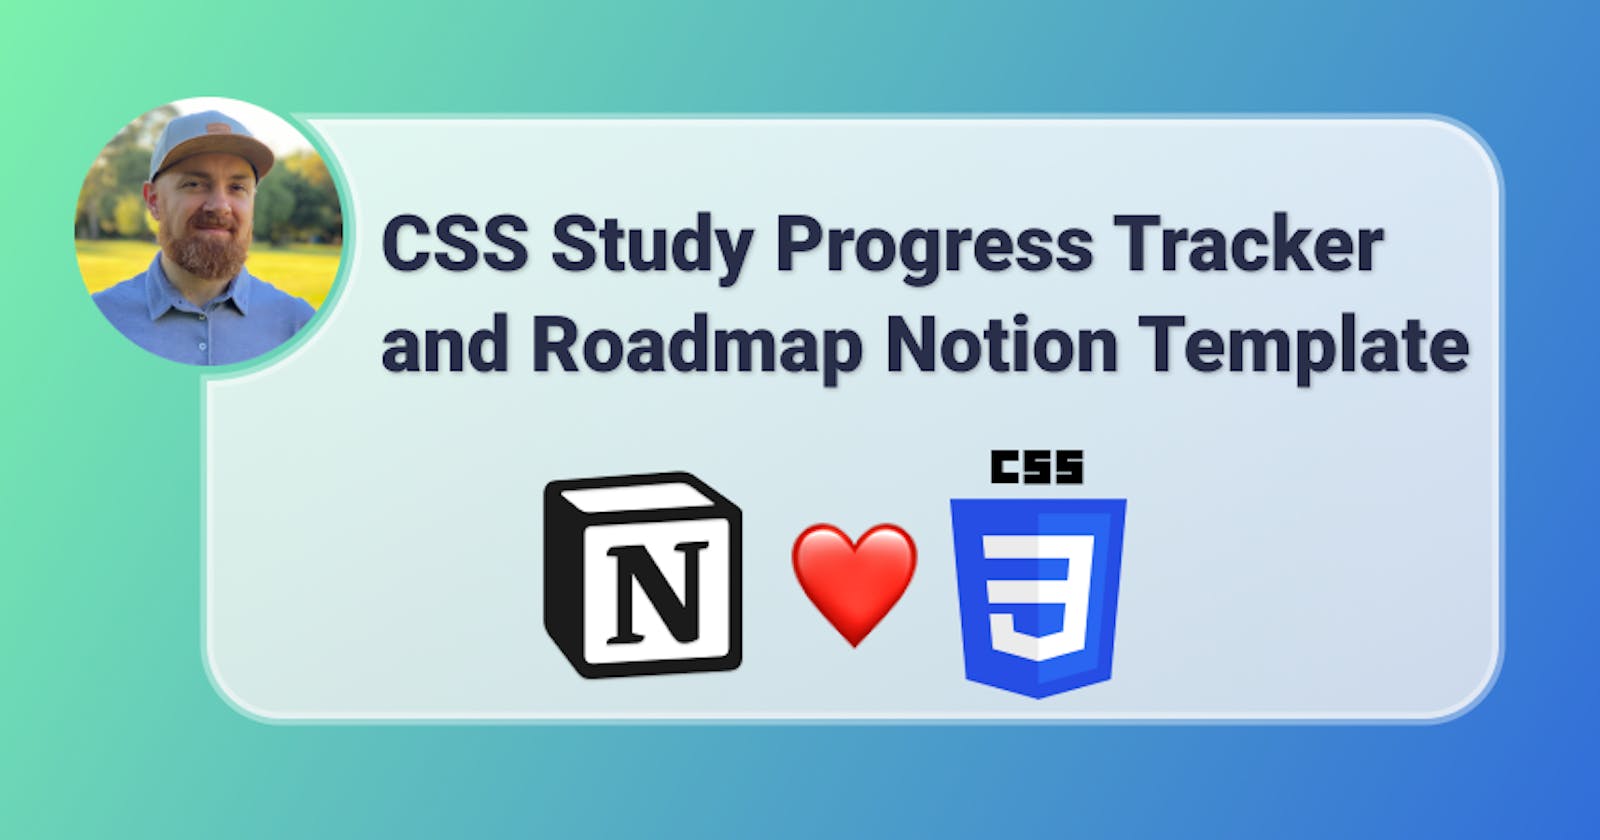 CSS Study Progress Tracker and Roadmap Notion Template